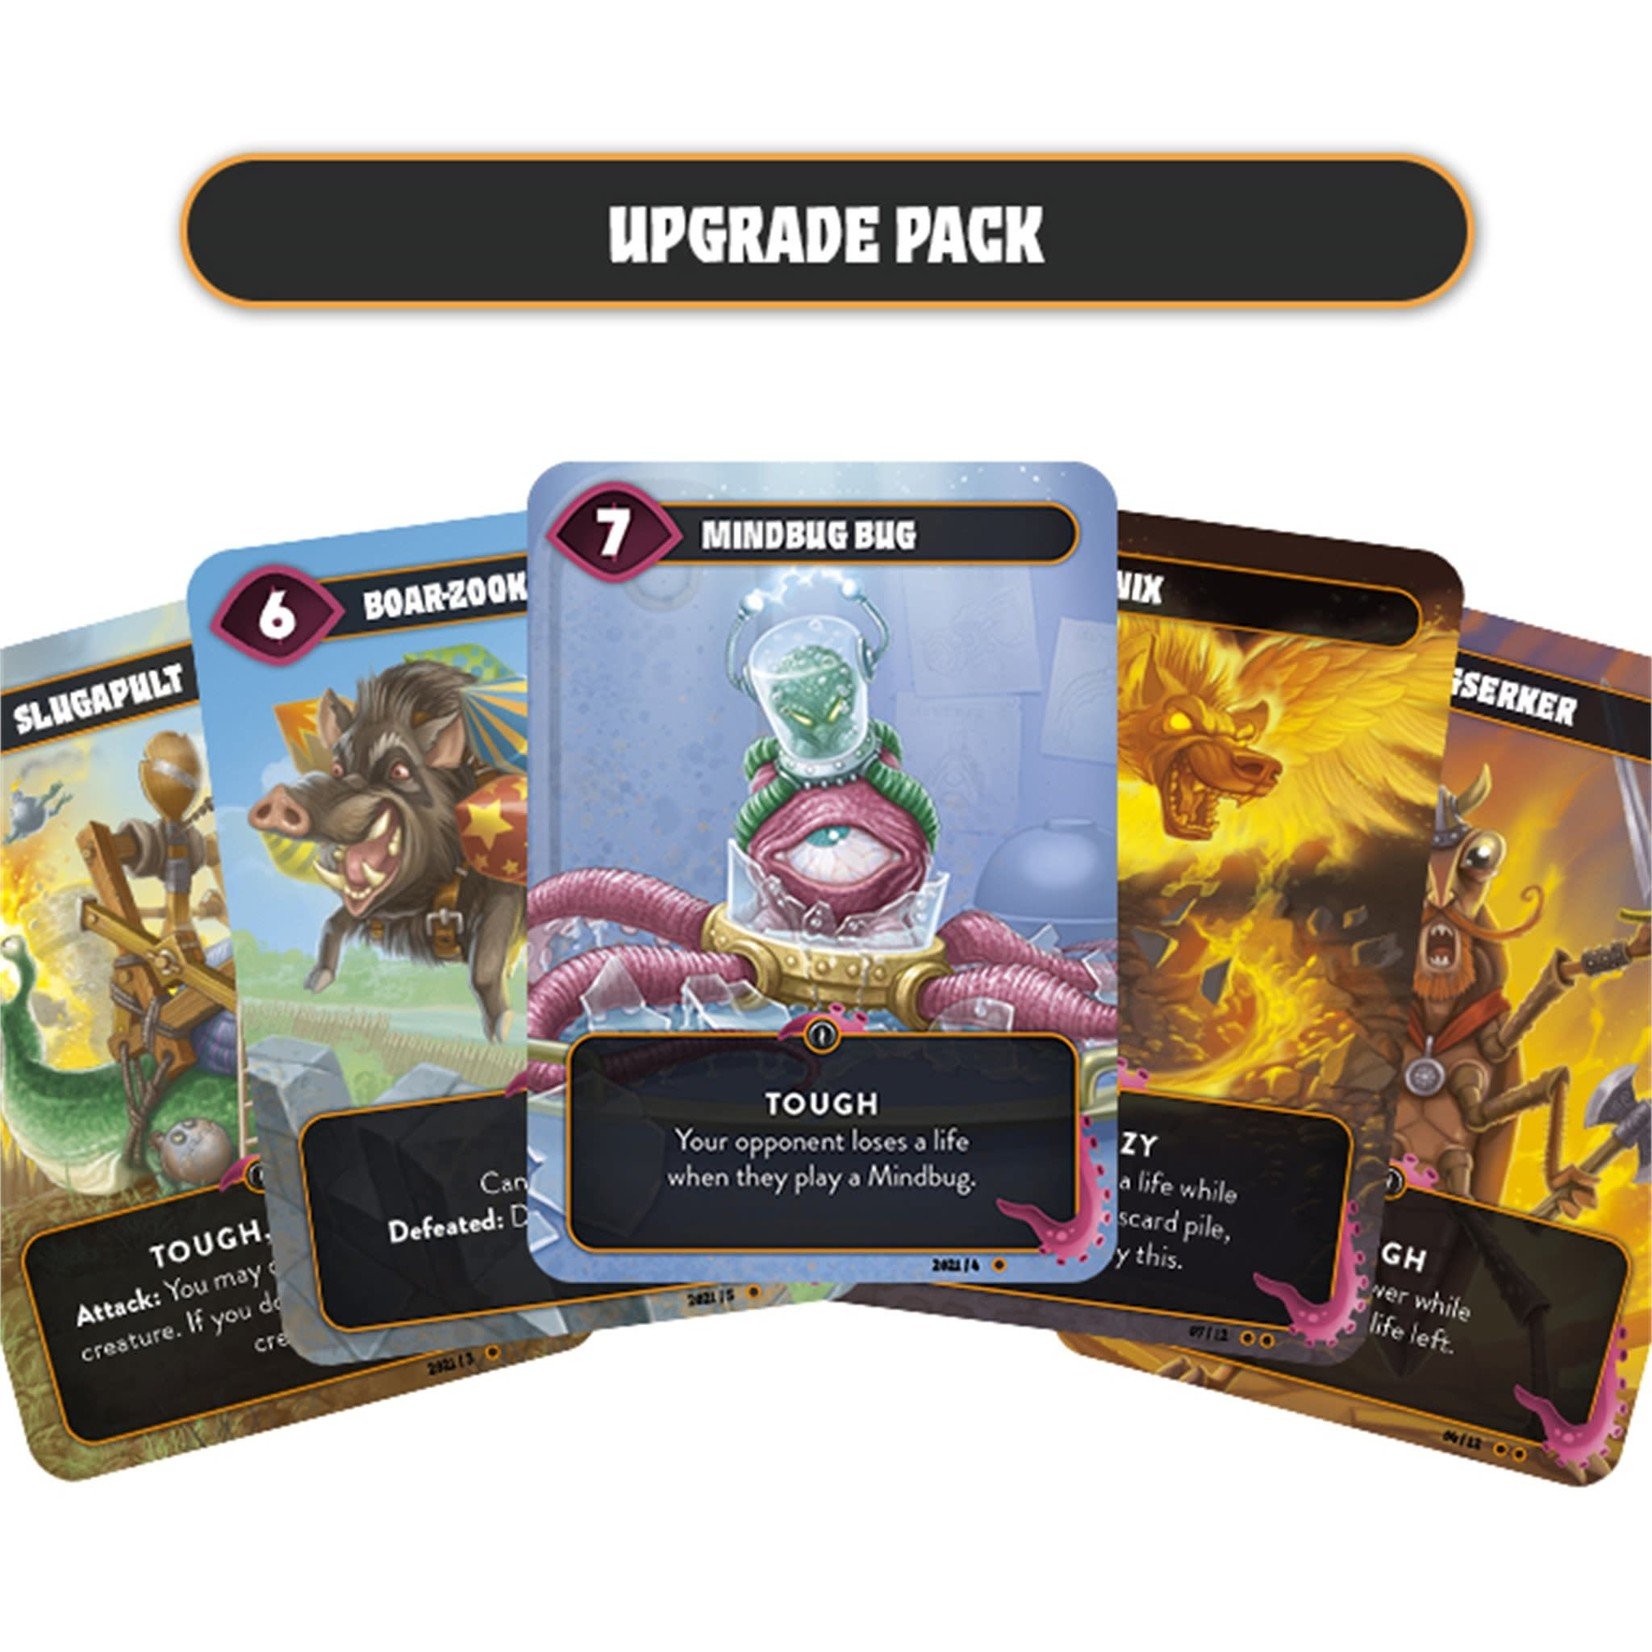 Mindbug - Final Upgrade Pack Card reveal. Last week we introduced